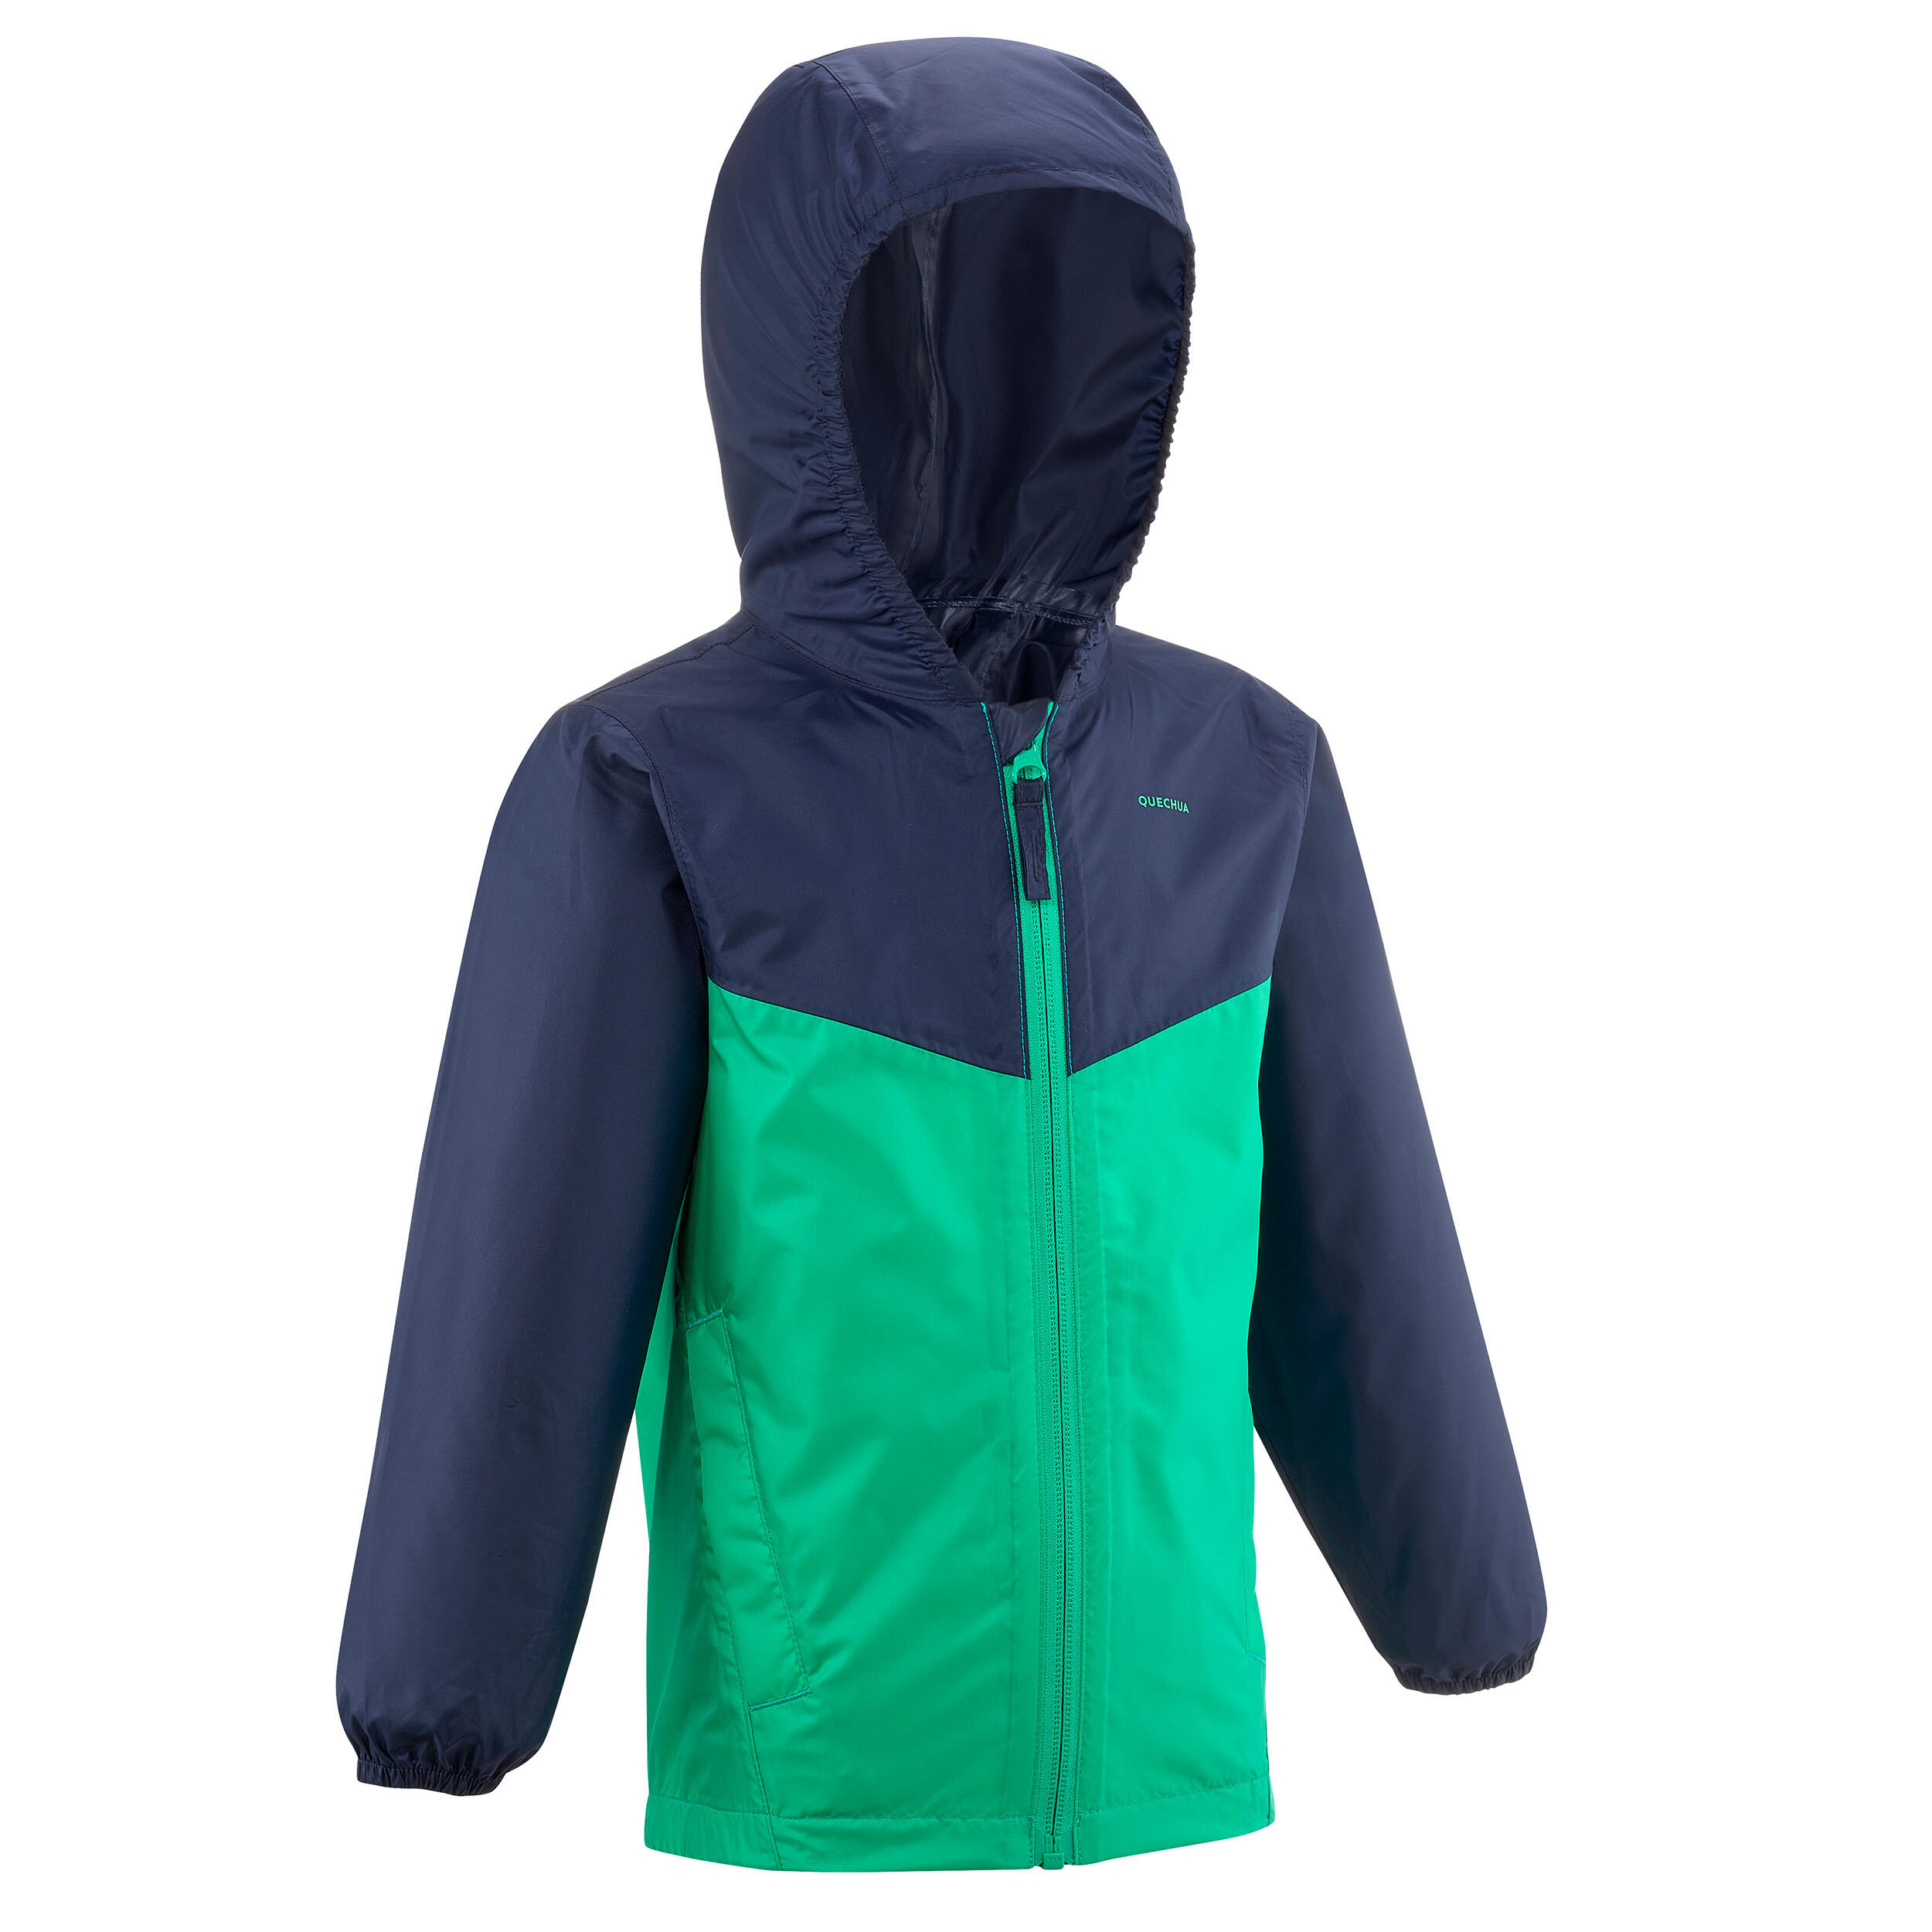 QUECHUA Kids’ Waterproof Hiking Jacket - MH100 Zip - Aged 2-6